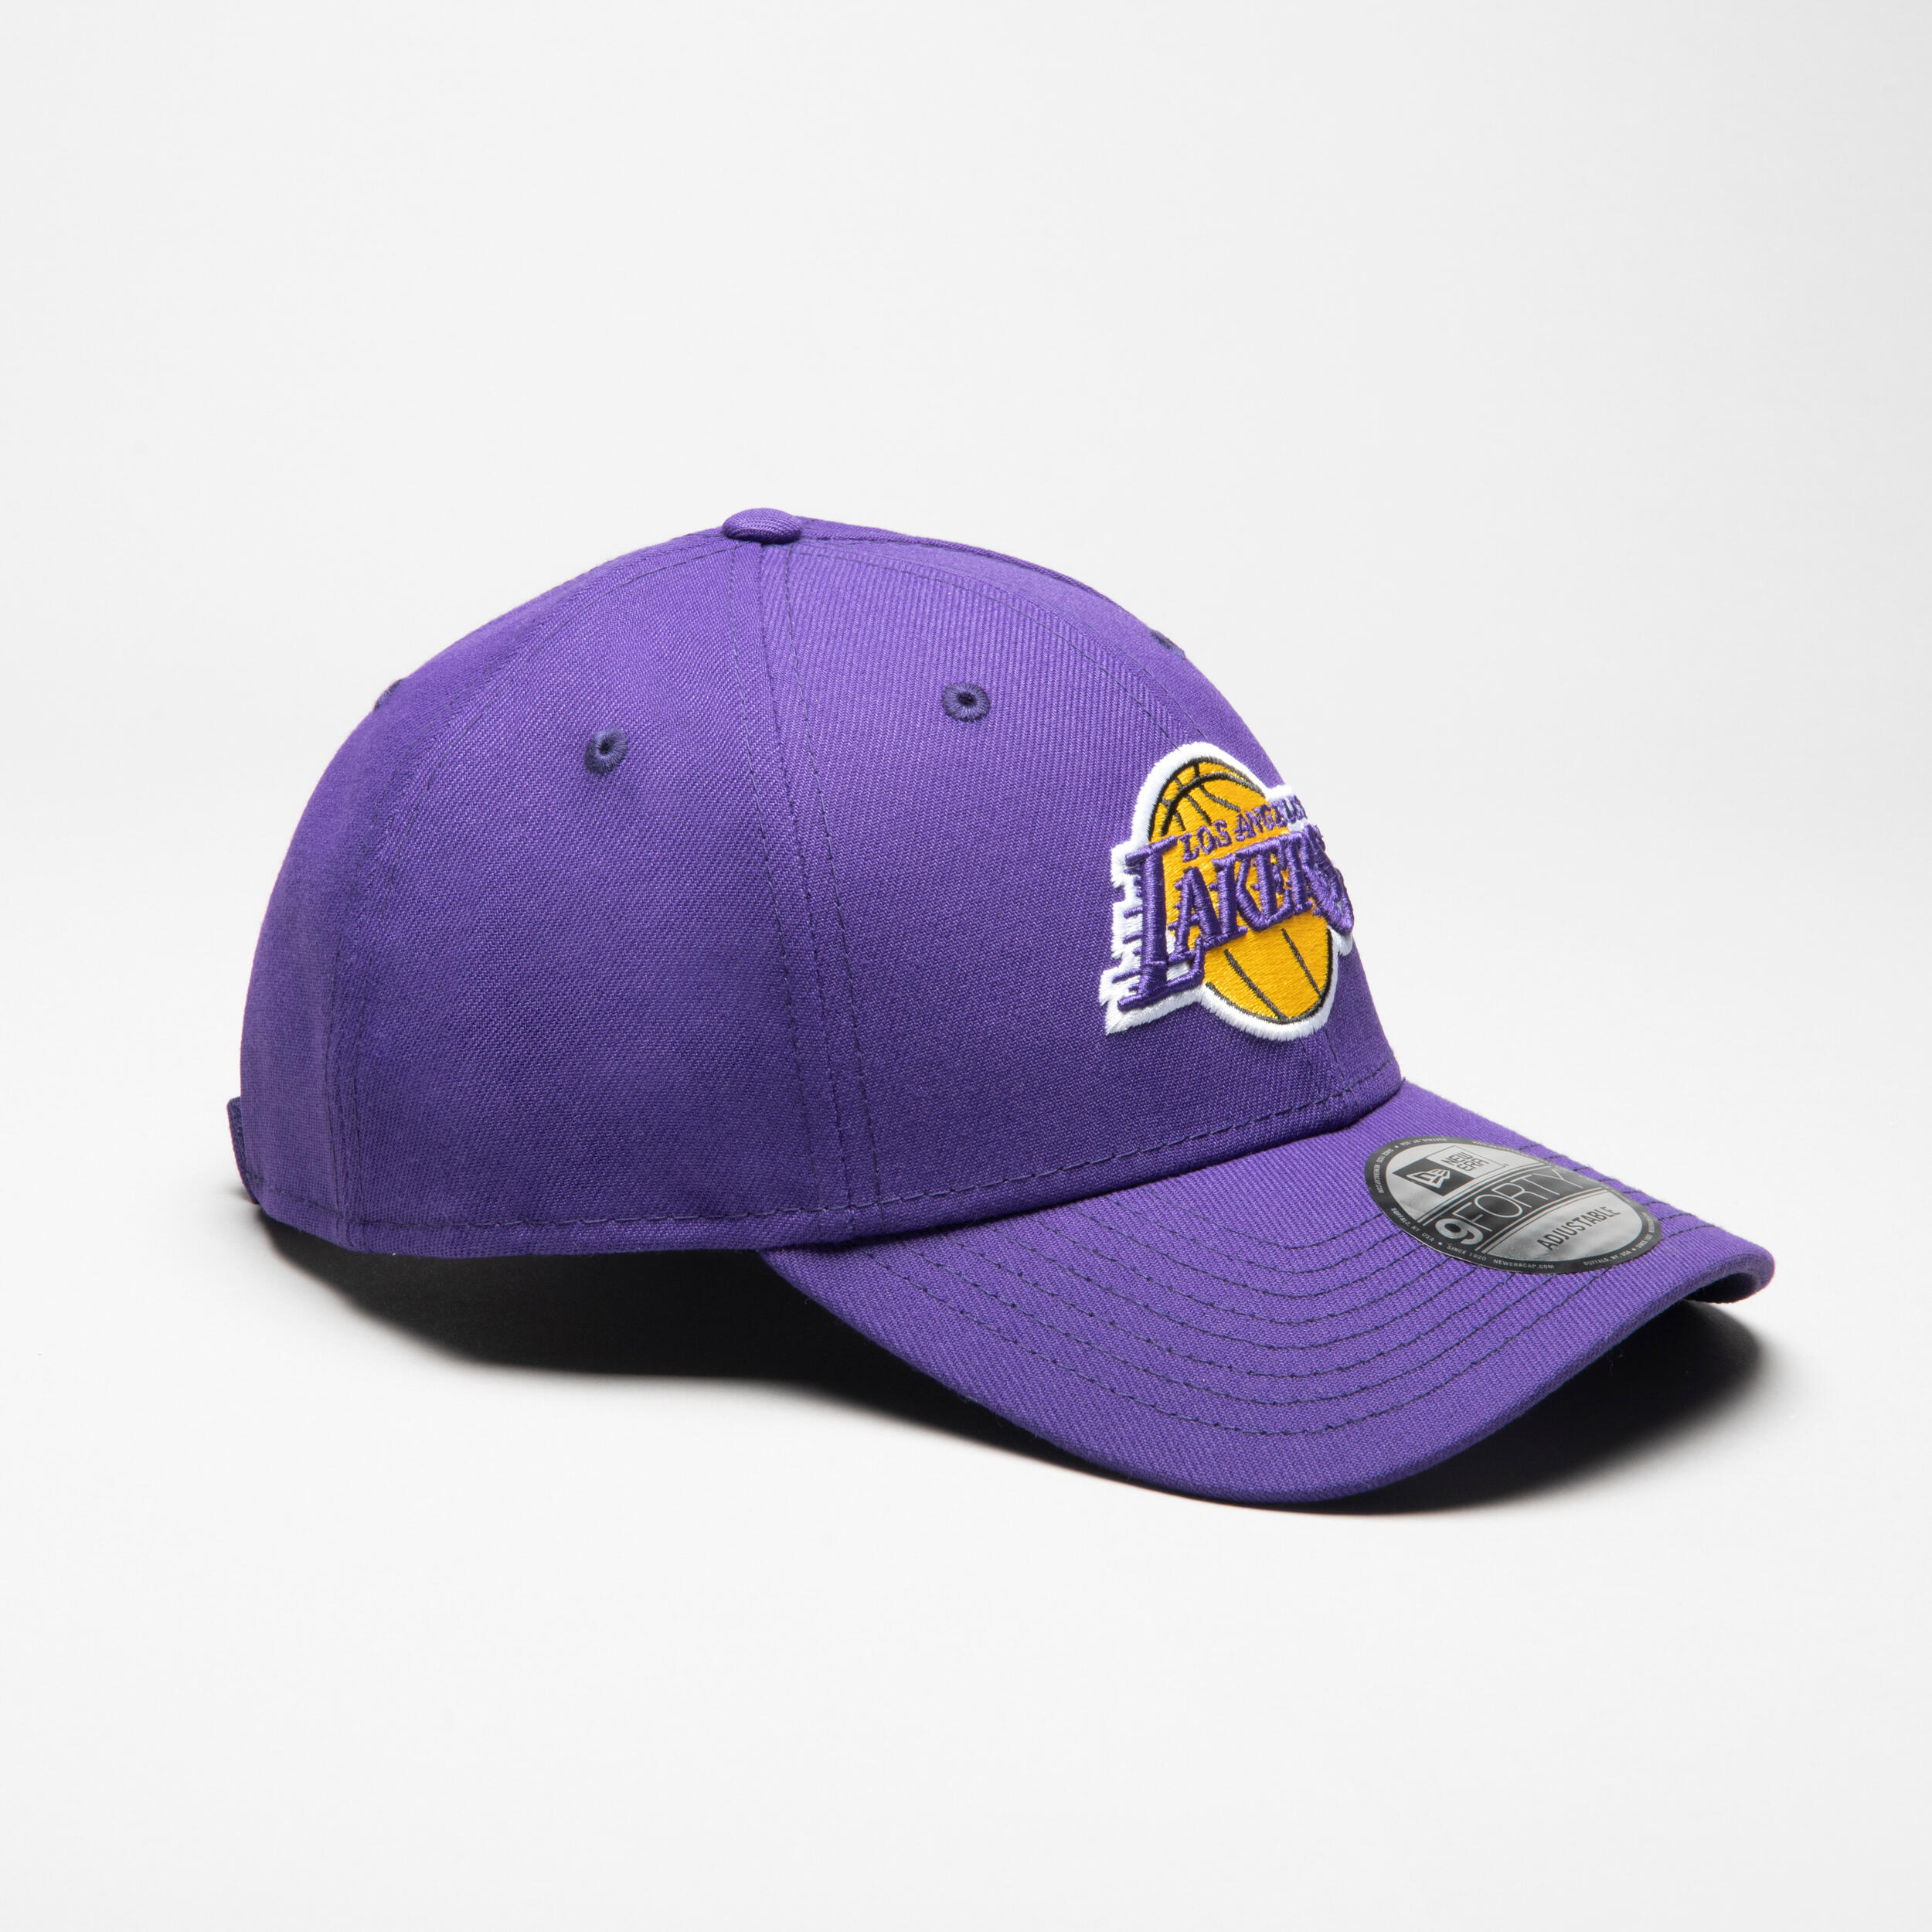 Men's/Women's Basketball Cap NBA - Los Angeles Lakers/Purple 2/7